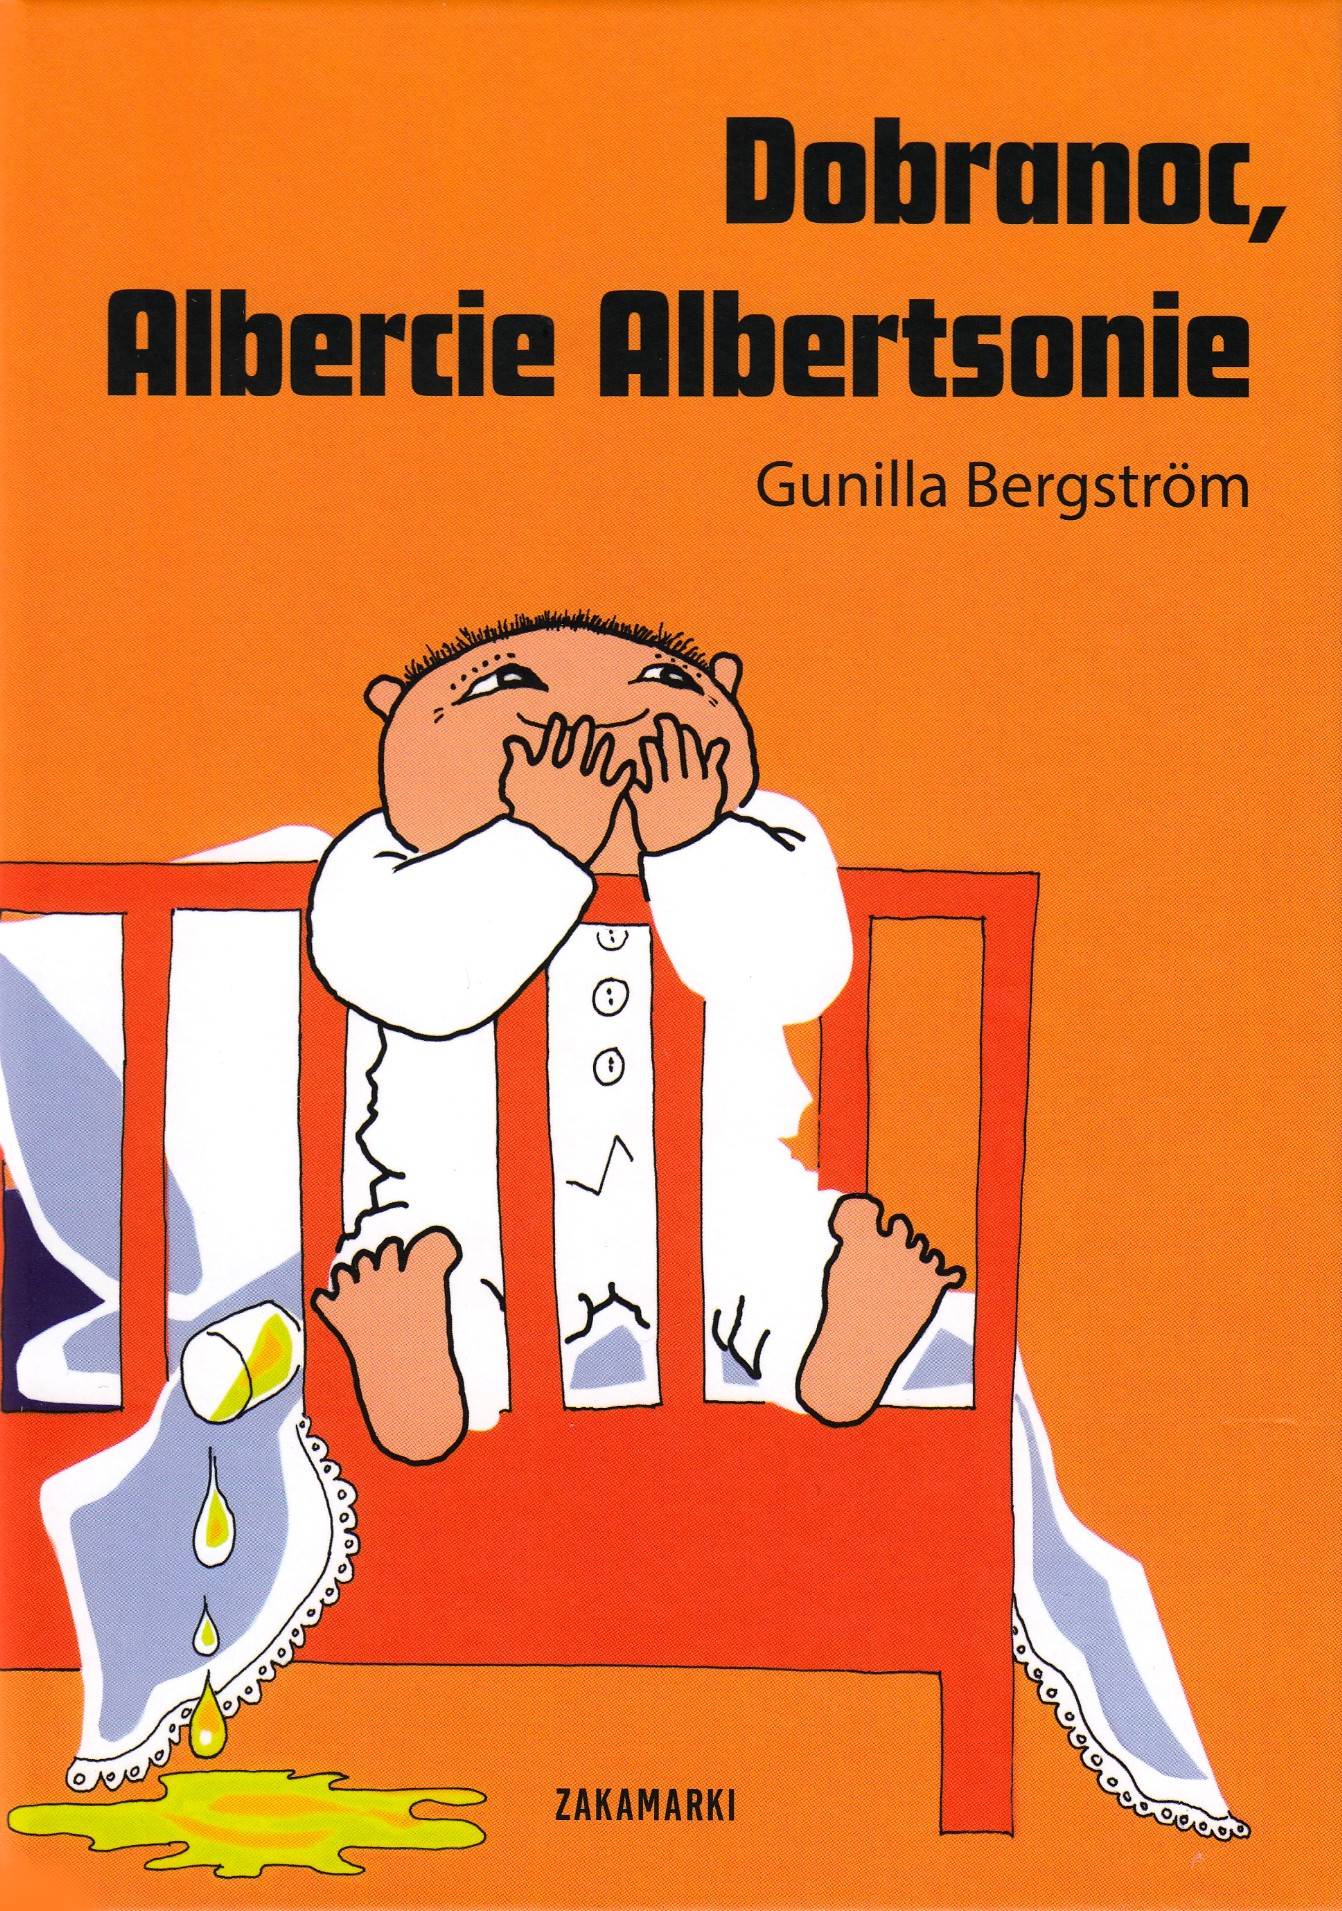 Dobranoc, Albercie Albertsonie